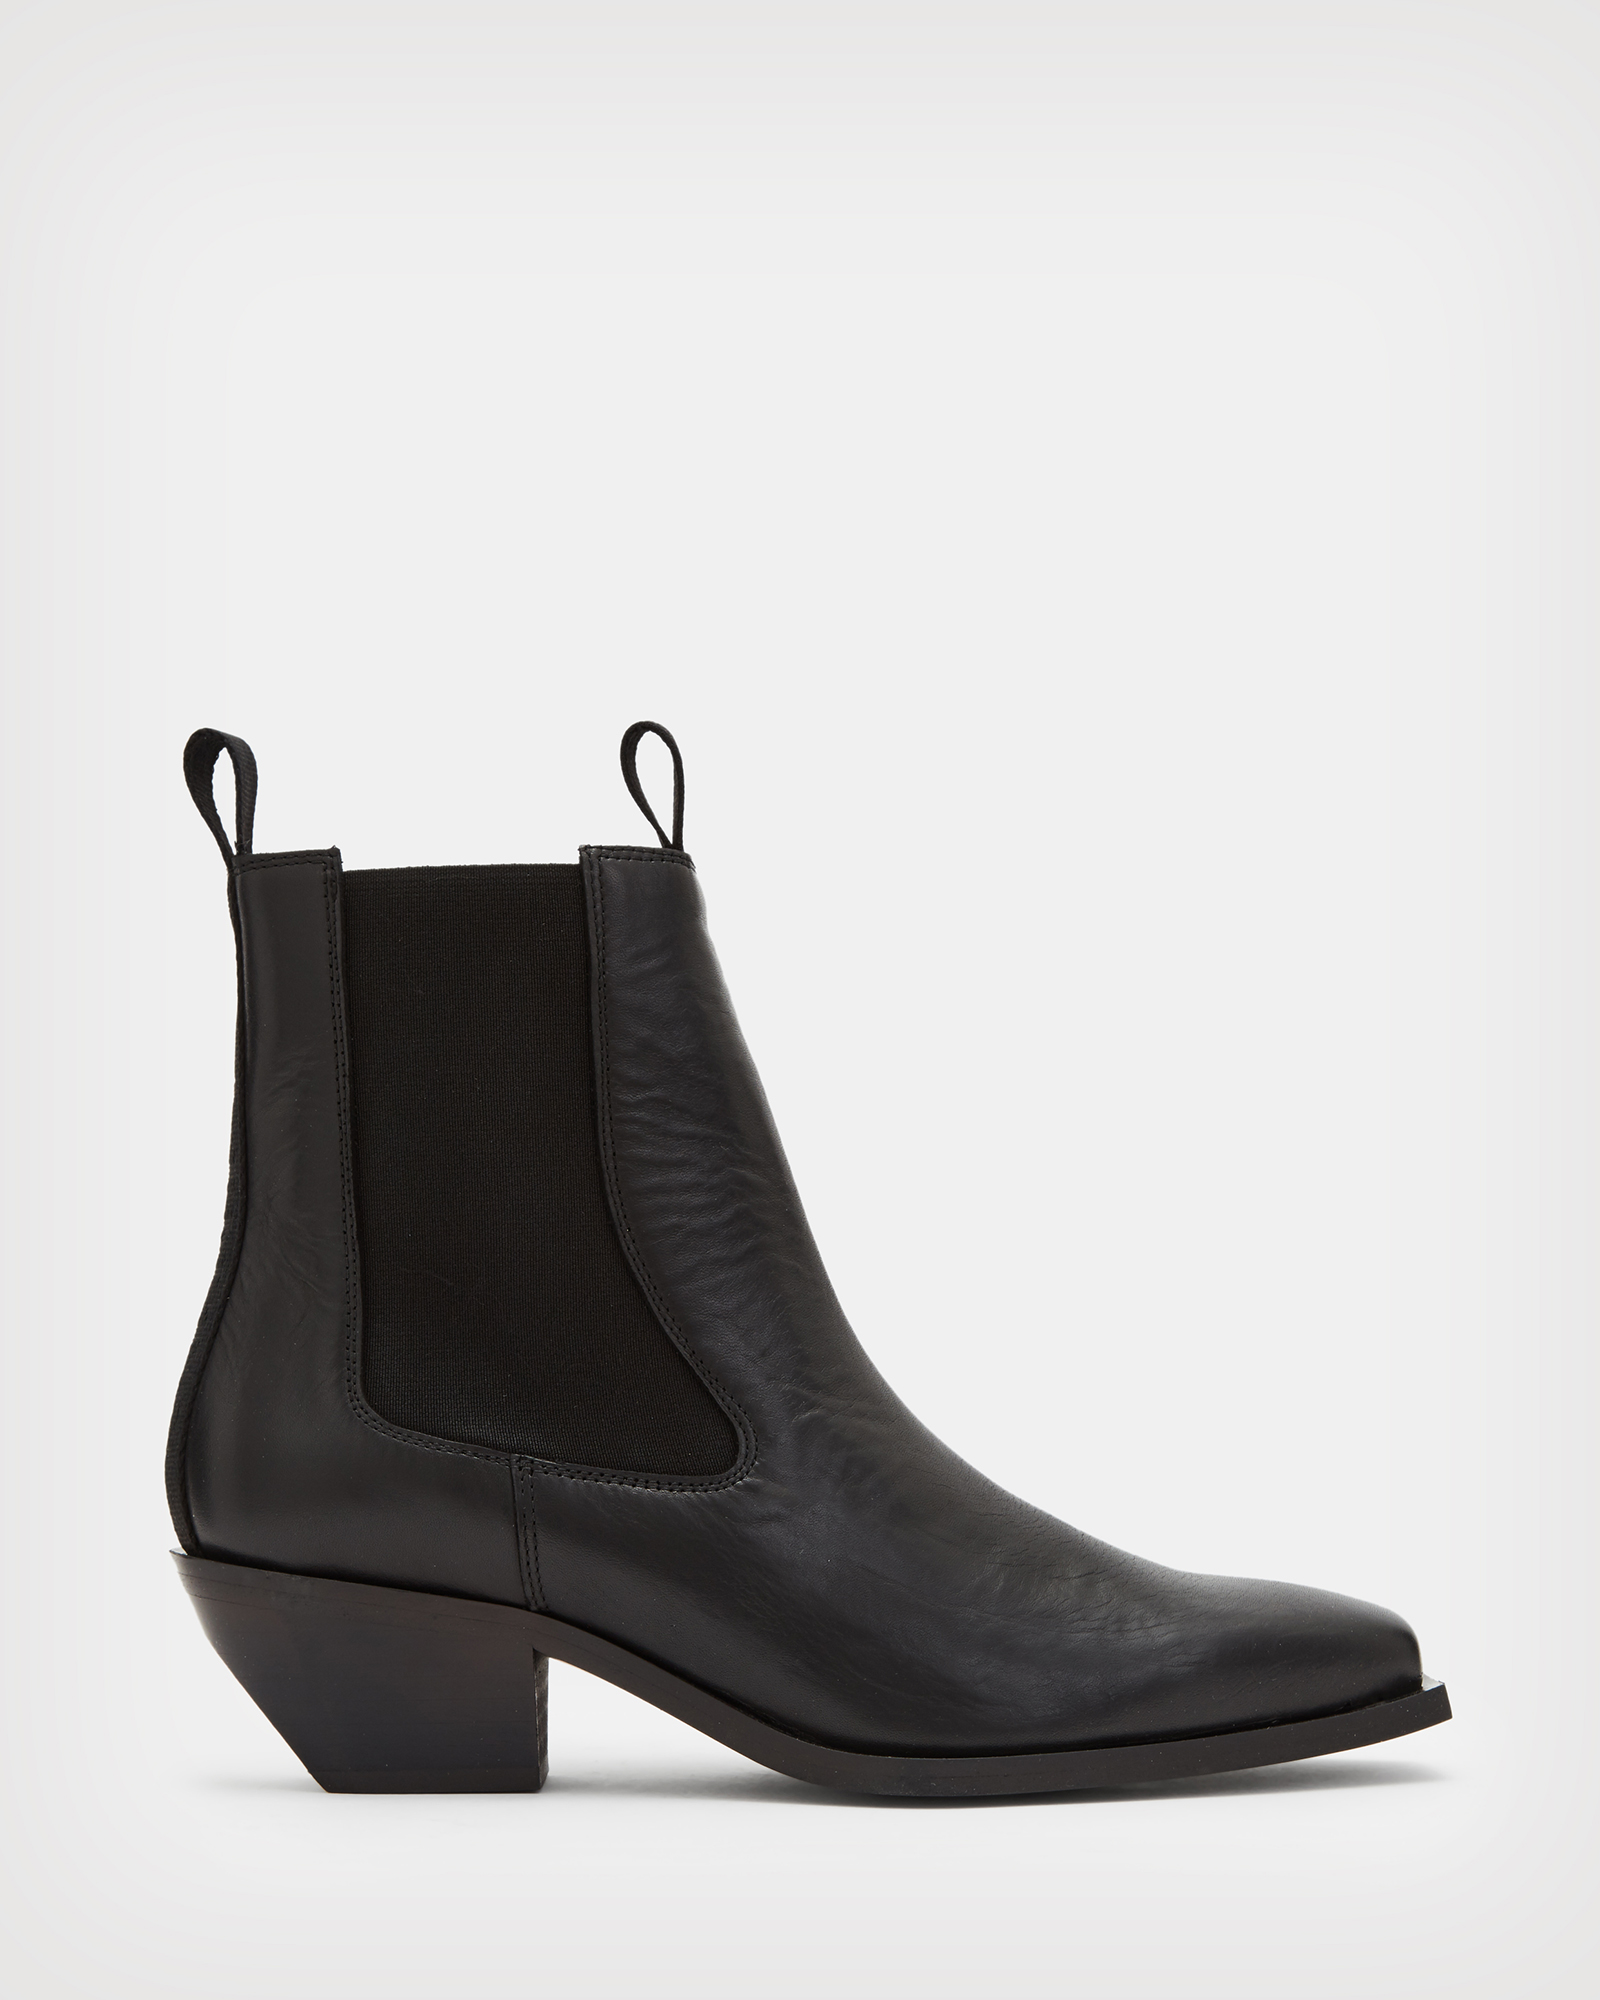 AllSaints Women's Leather Vally Boots, Black, Size: UK 3/US 6/EU 36